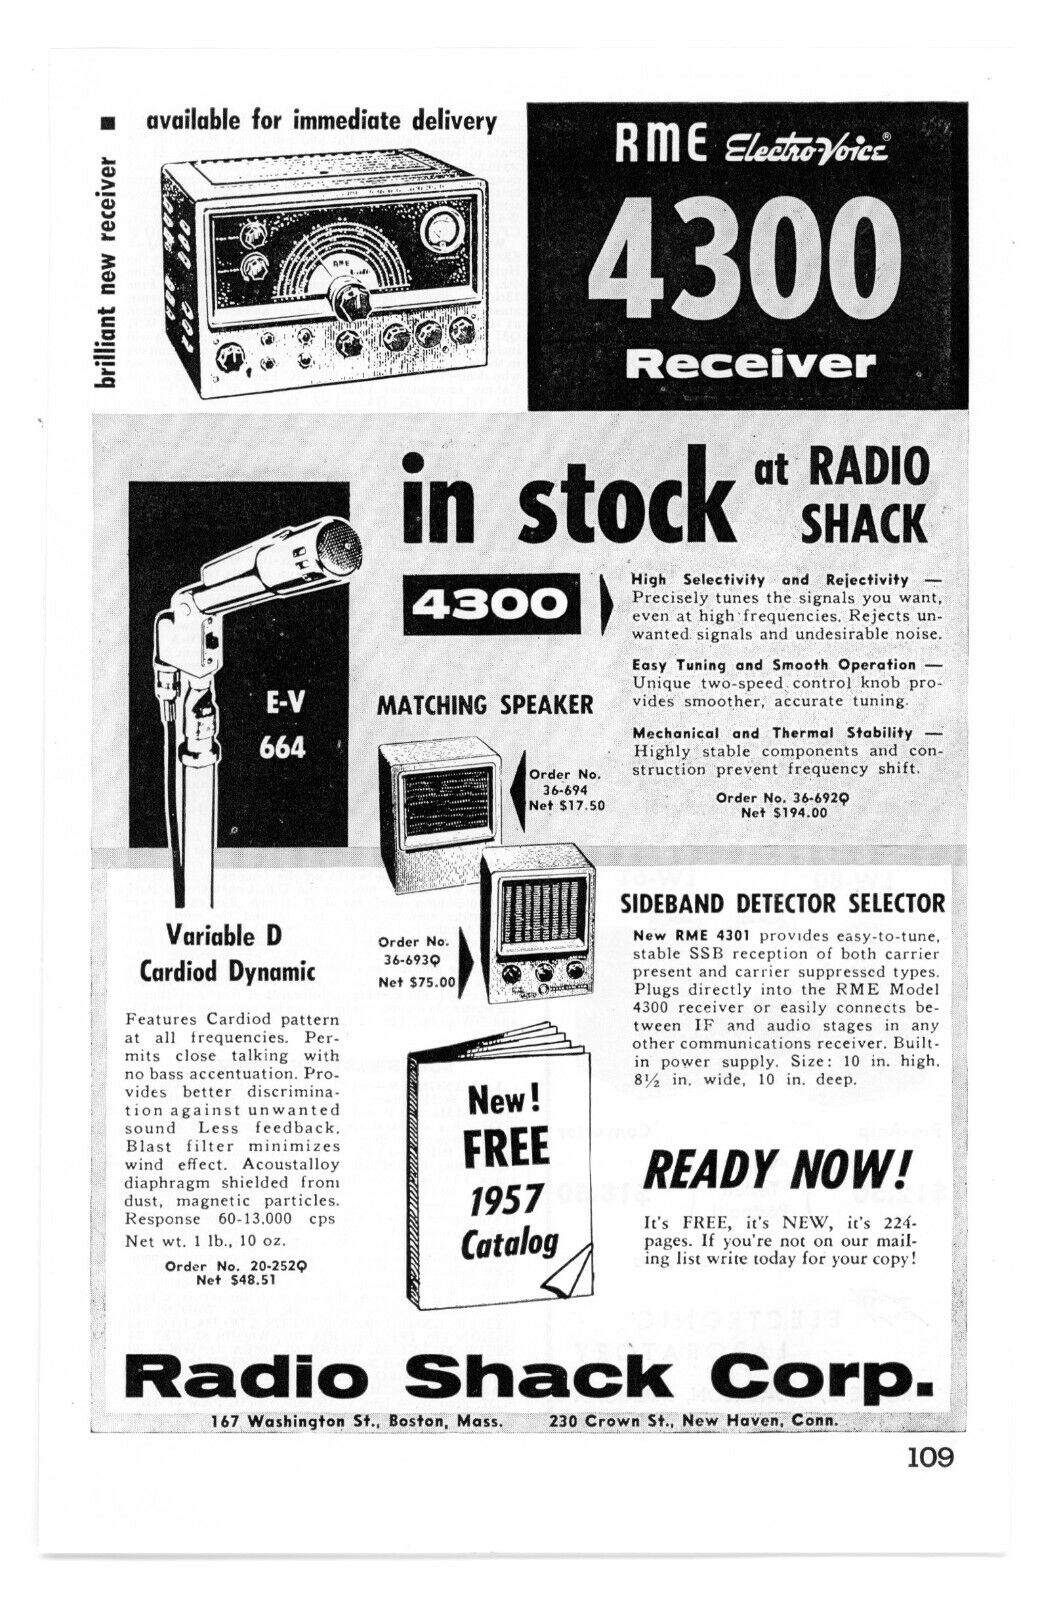 QST Ham Radio Magazine Ad RME Electro-Voice 4300 Receiver RADIO SHACK (9/56)